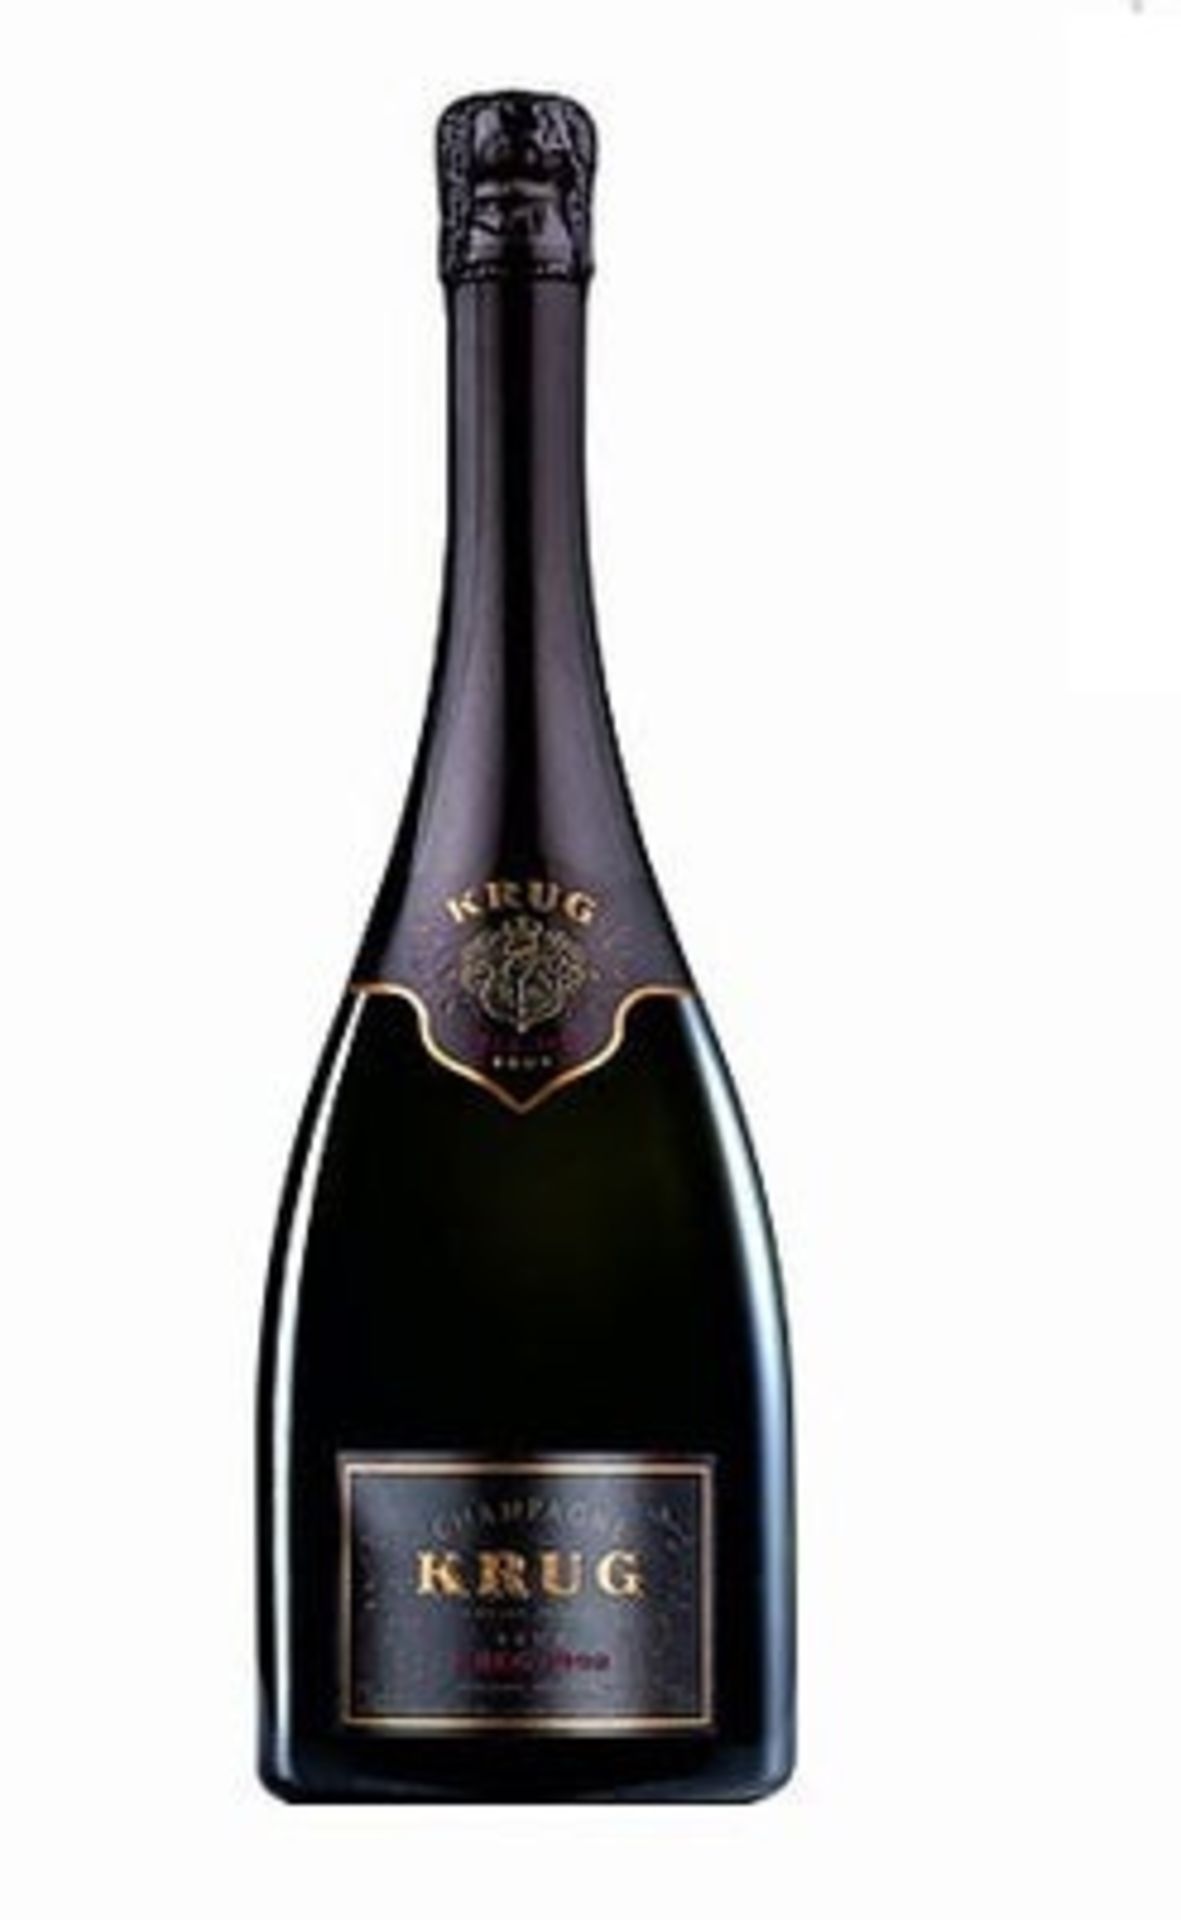 1989 Krug Vintage Brut, Champagne ( Bid Is For 1x Bottle Option To Purchase More)